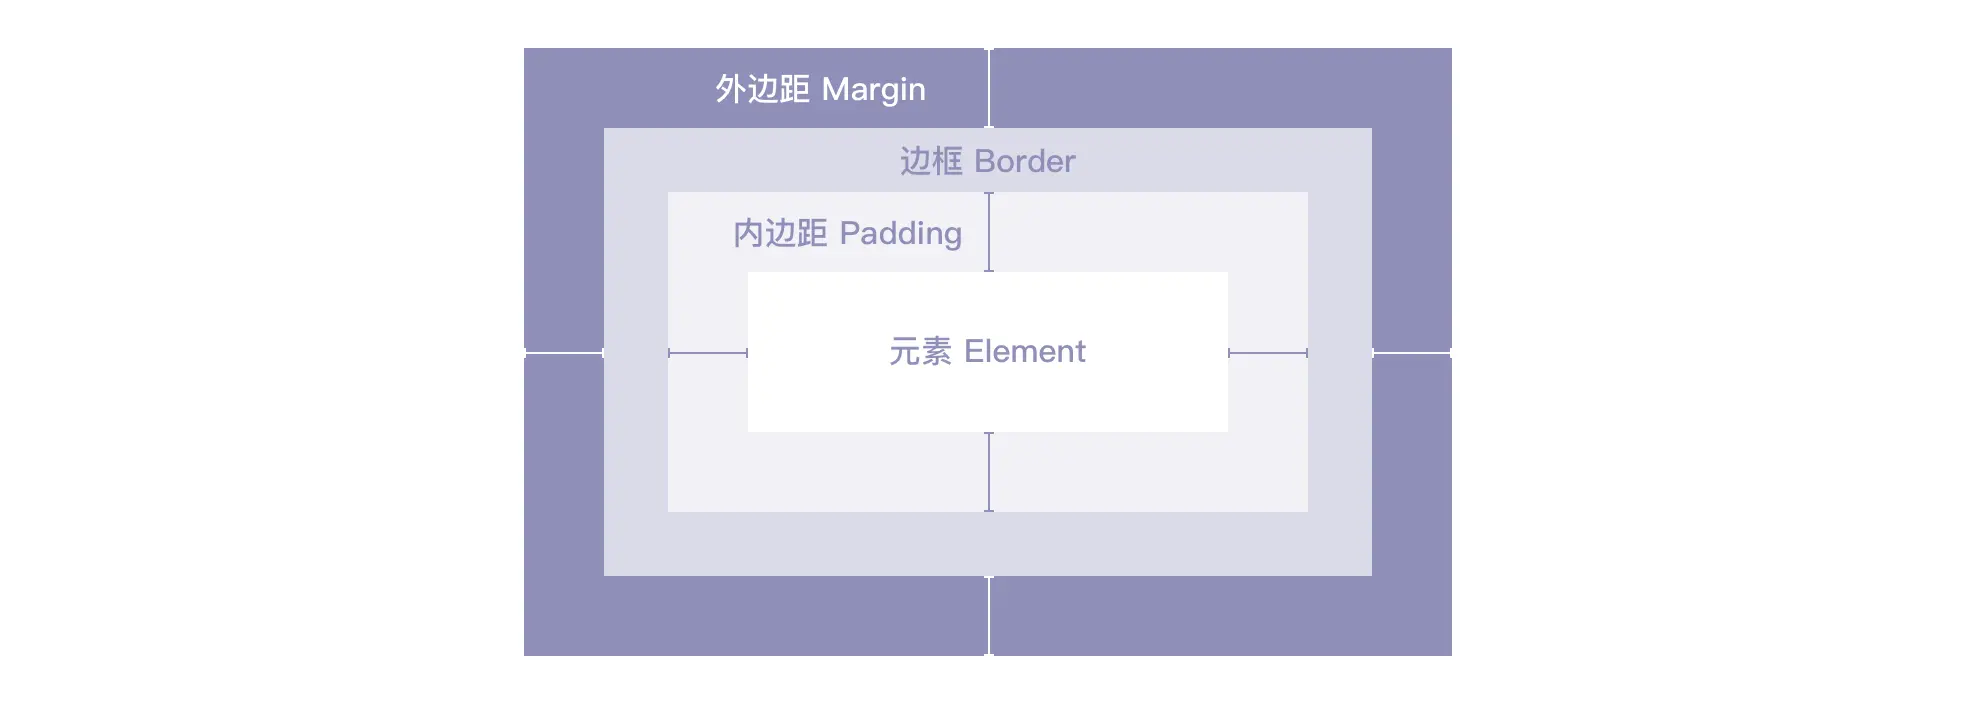 【To G设计赋能】广东省移动警务项目设计总结 | 人人都是产品经理 - 图10